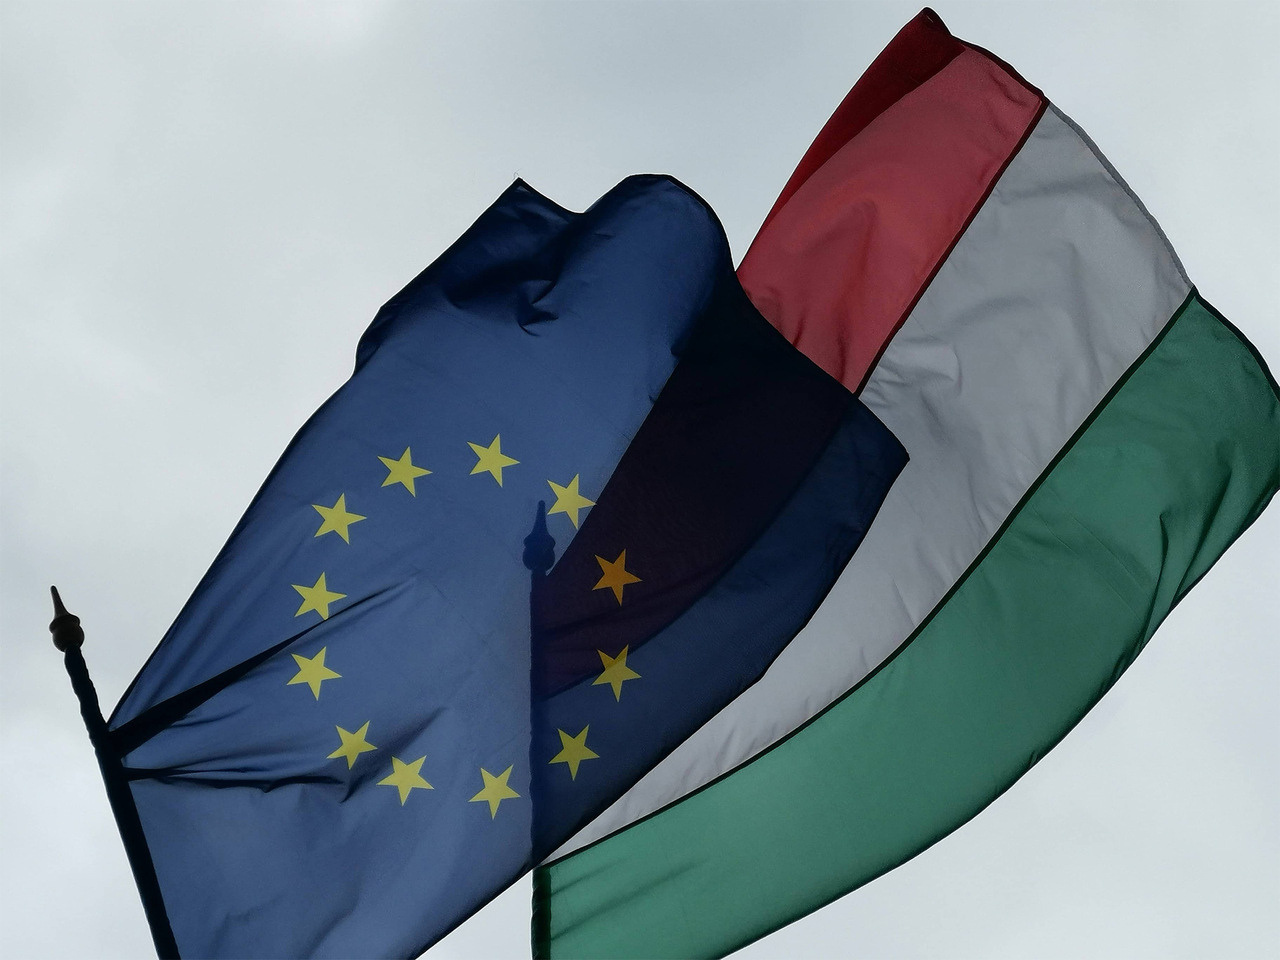 Steagul Ungariei Uniunii Europene